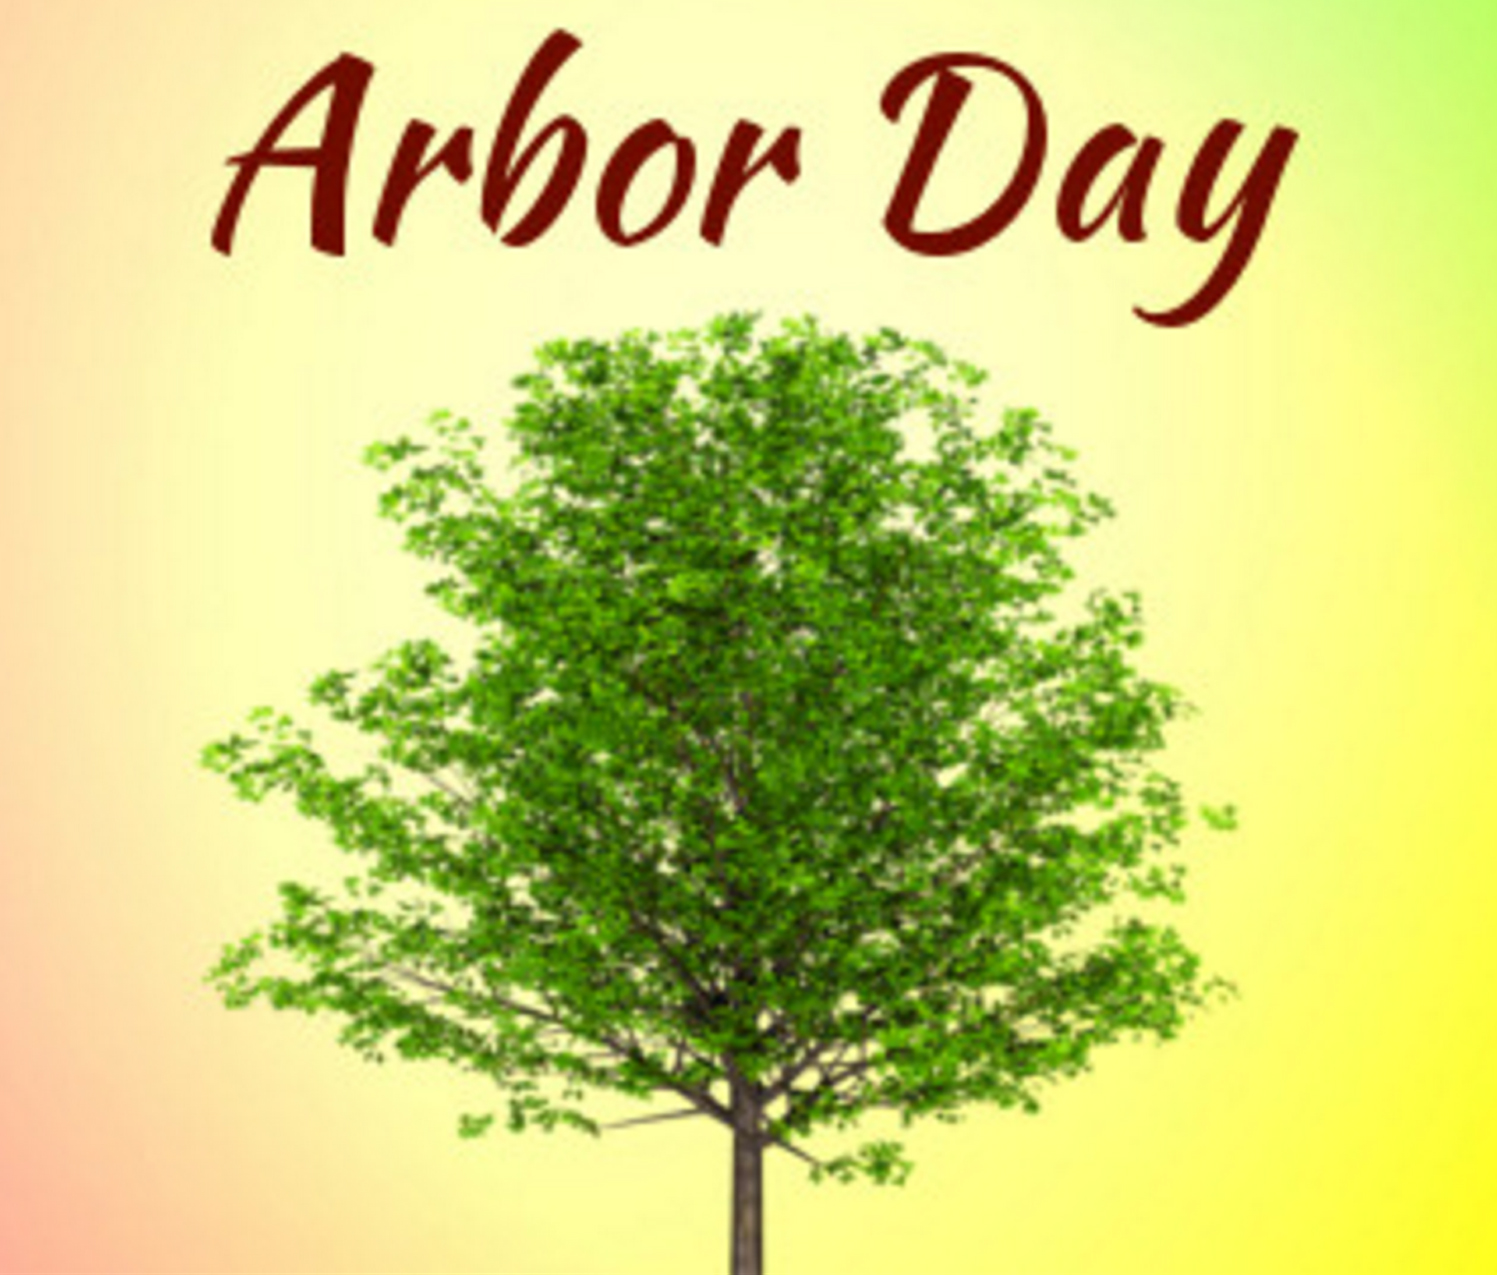 Historic Pelham The Celebration of Arbor Day in the Town of Pelham in